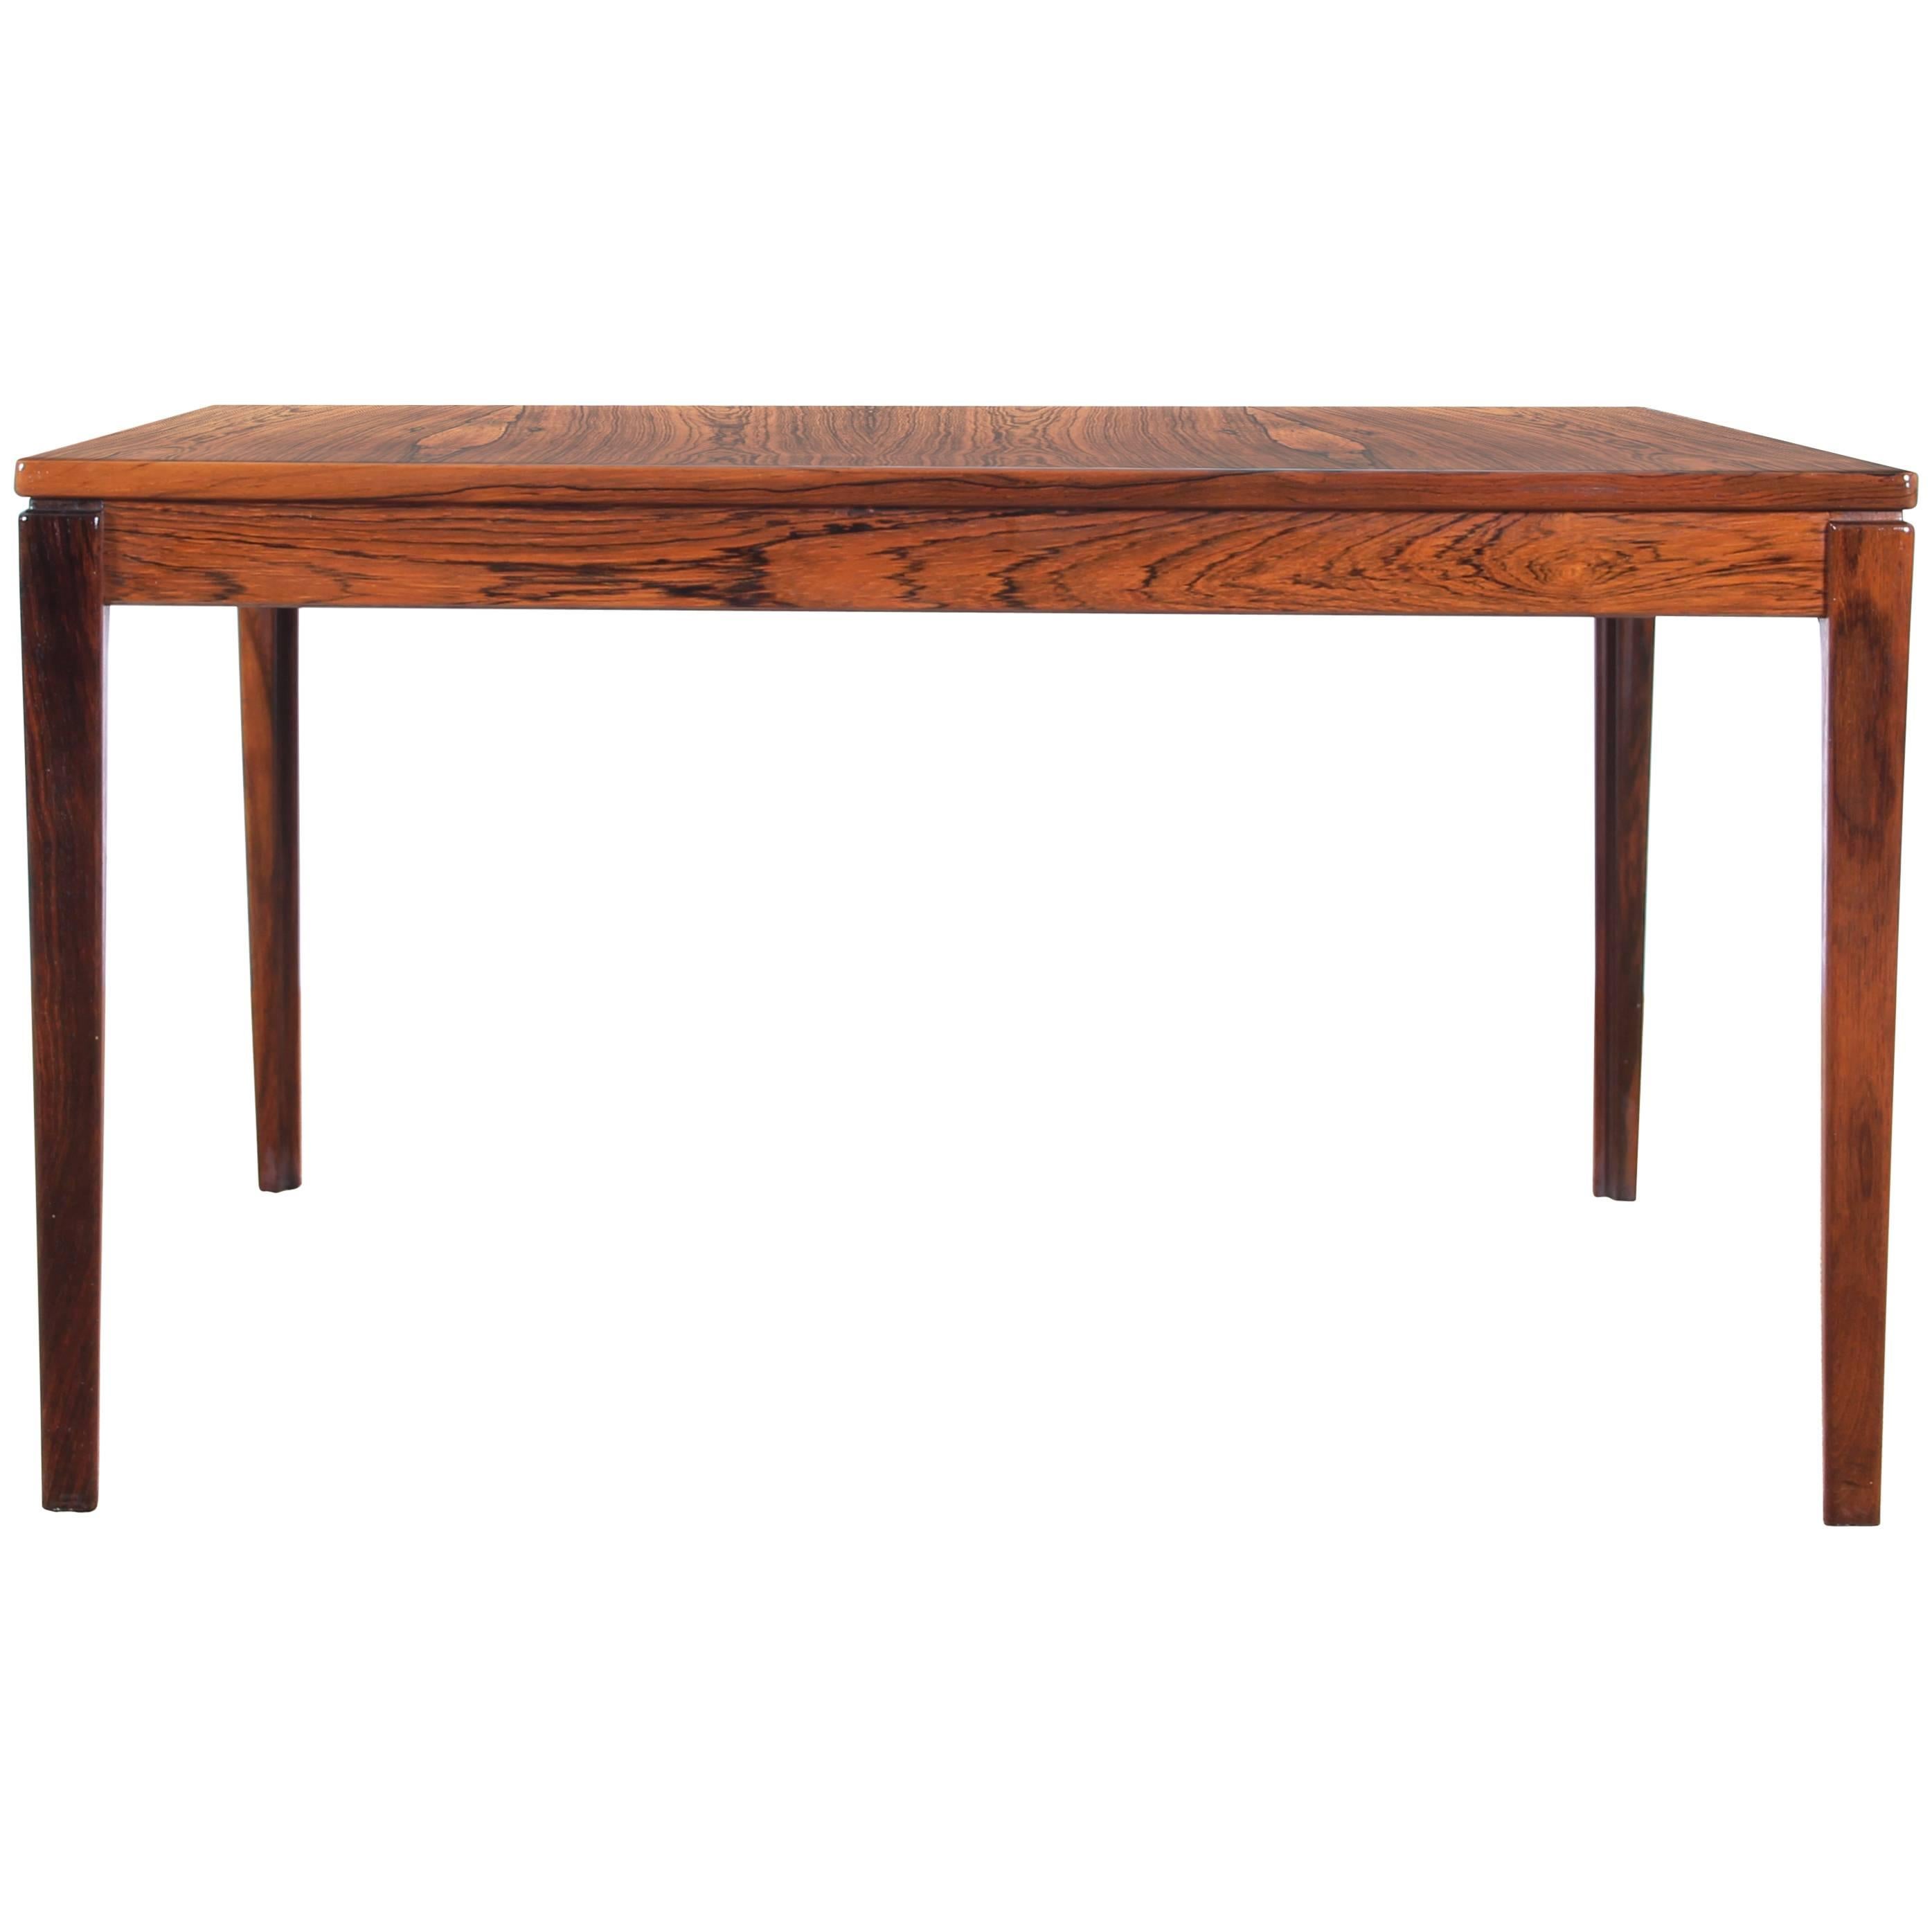 Table basse carrée moderne danoise en bois de rose, style danois